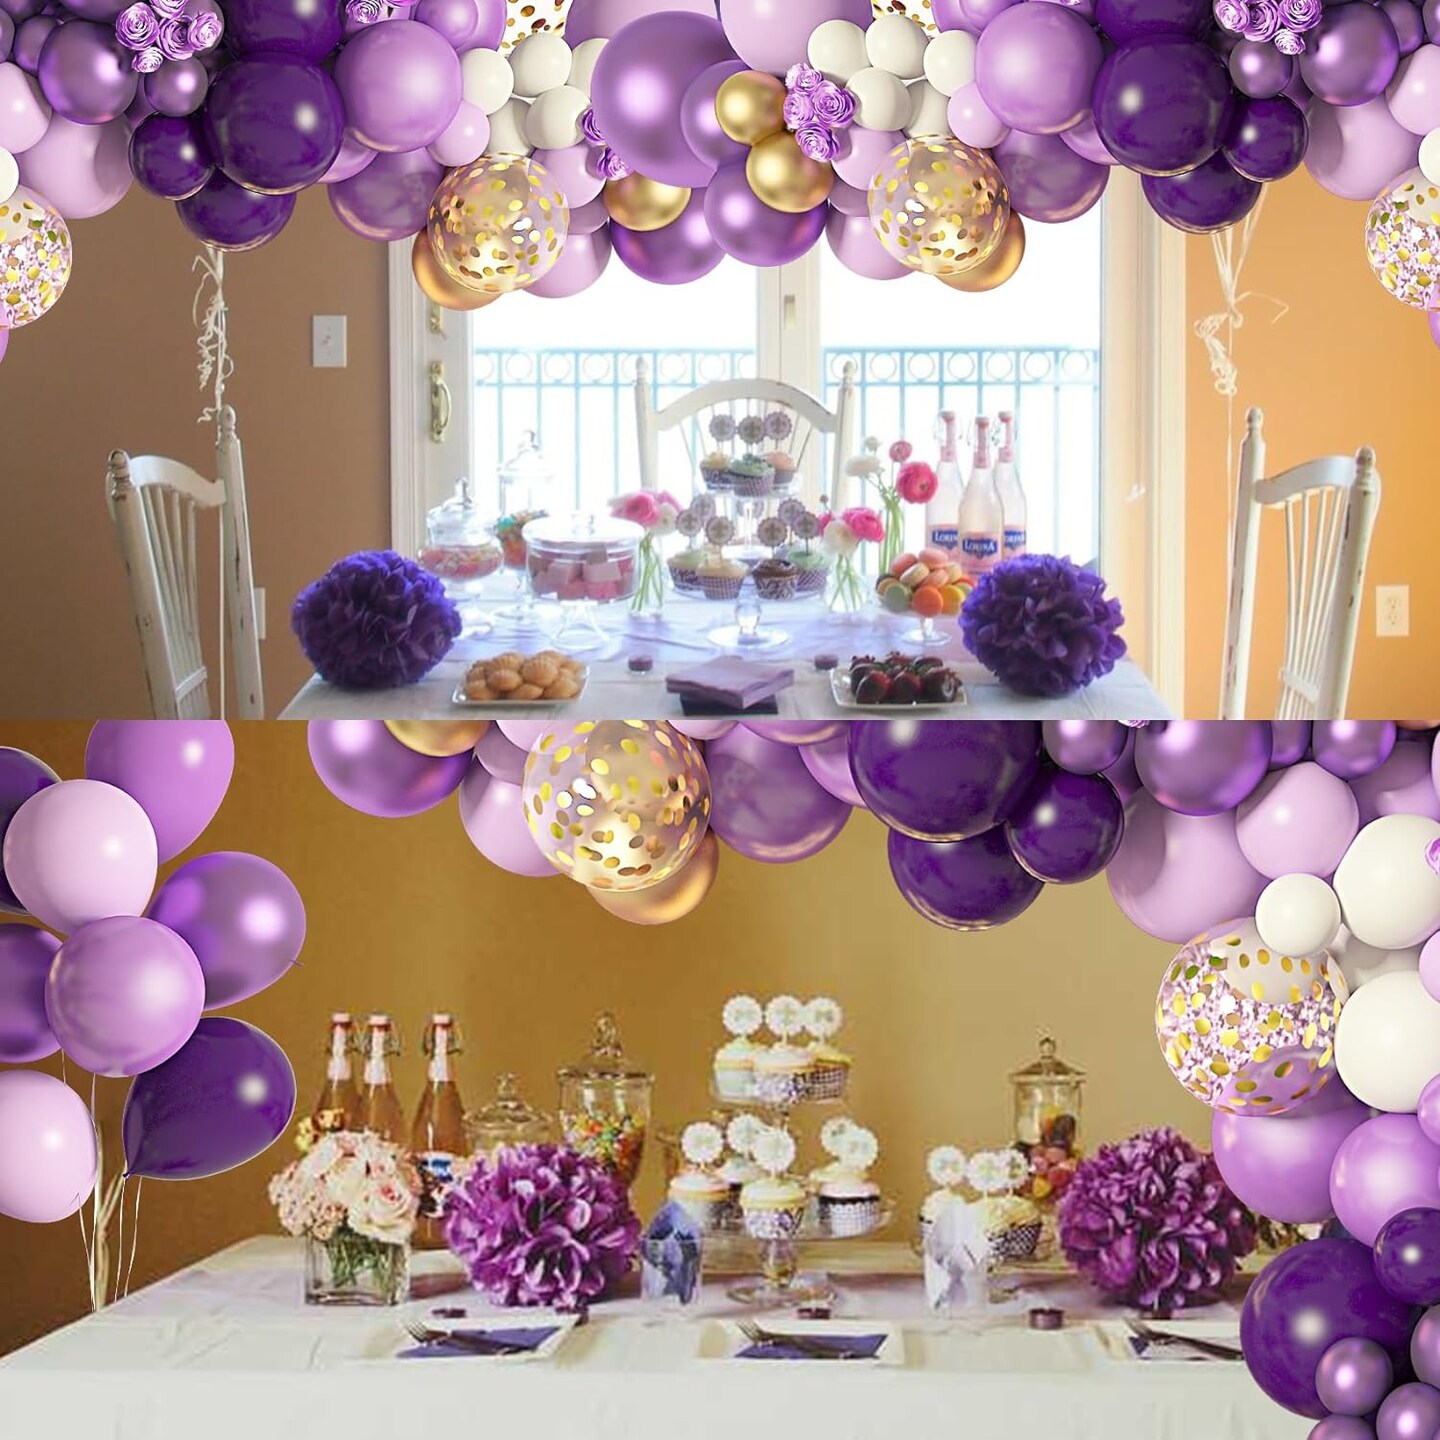 150Pcs Purple Balloons Garland Arch Kit, Light Pastel Purple Gold White Balloons Confetti Latex Metallic Balloons for Women Birthday Baby Shower Wedding Party Decorations Supplies